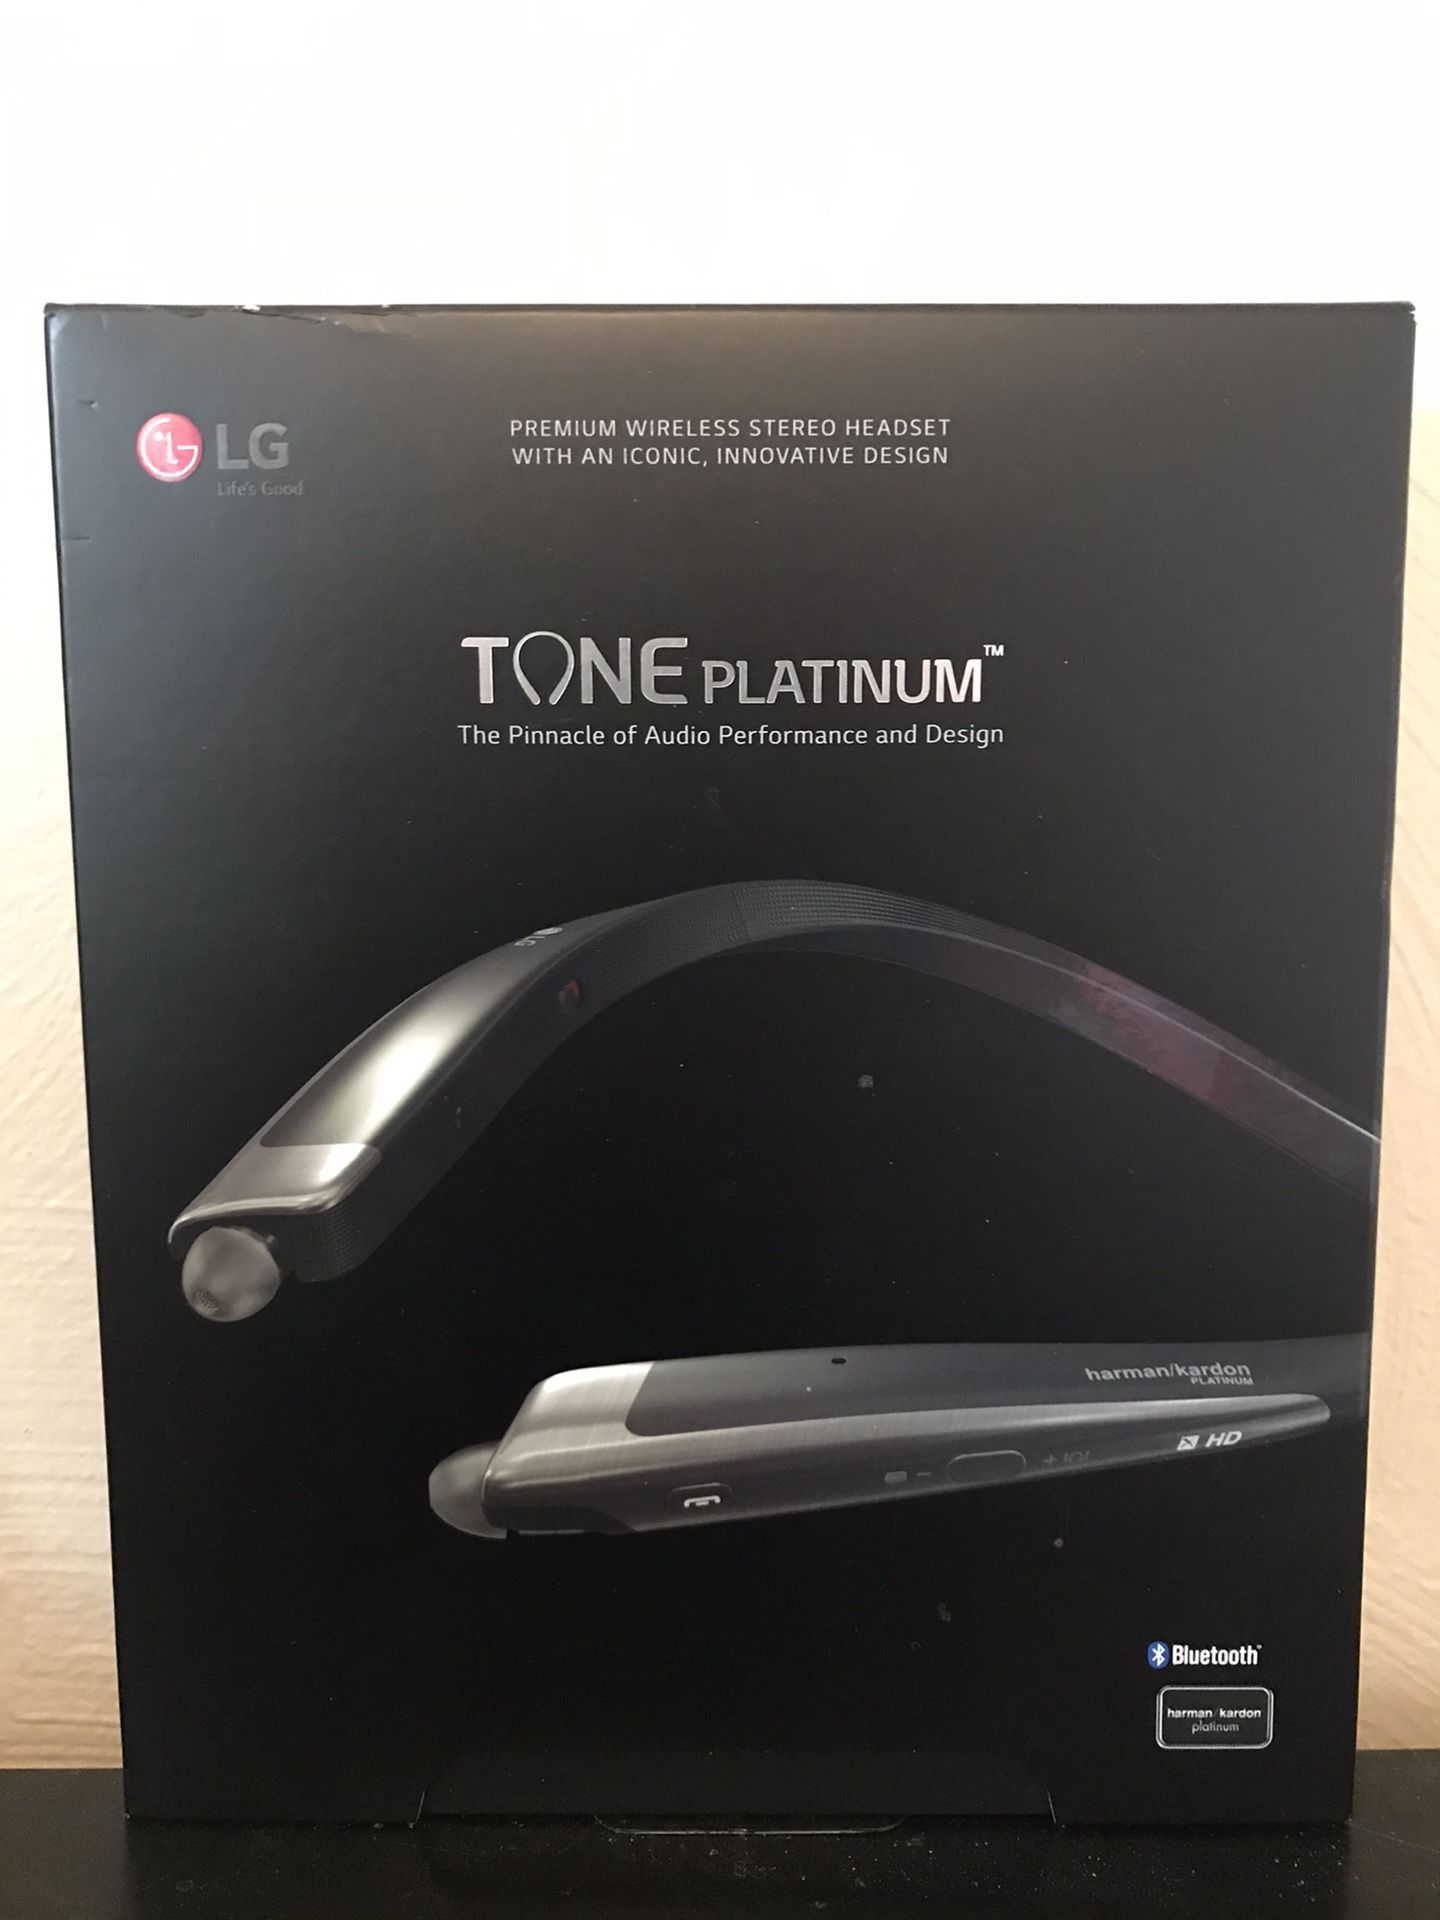 LG Tone Platinum Premium Wireless Headset- Bluetooth